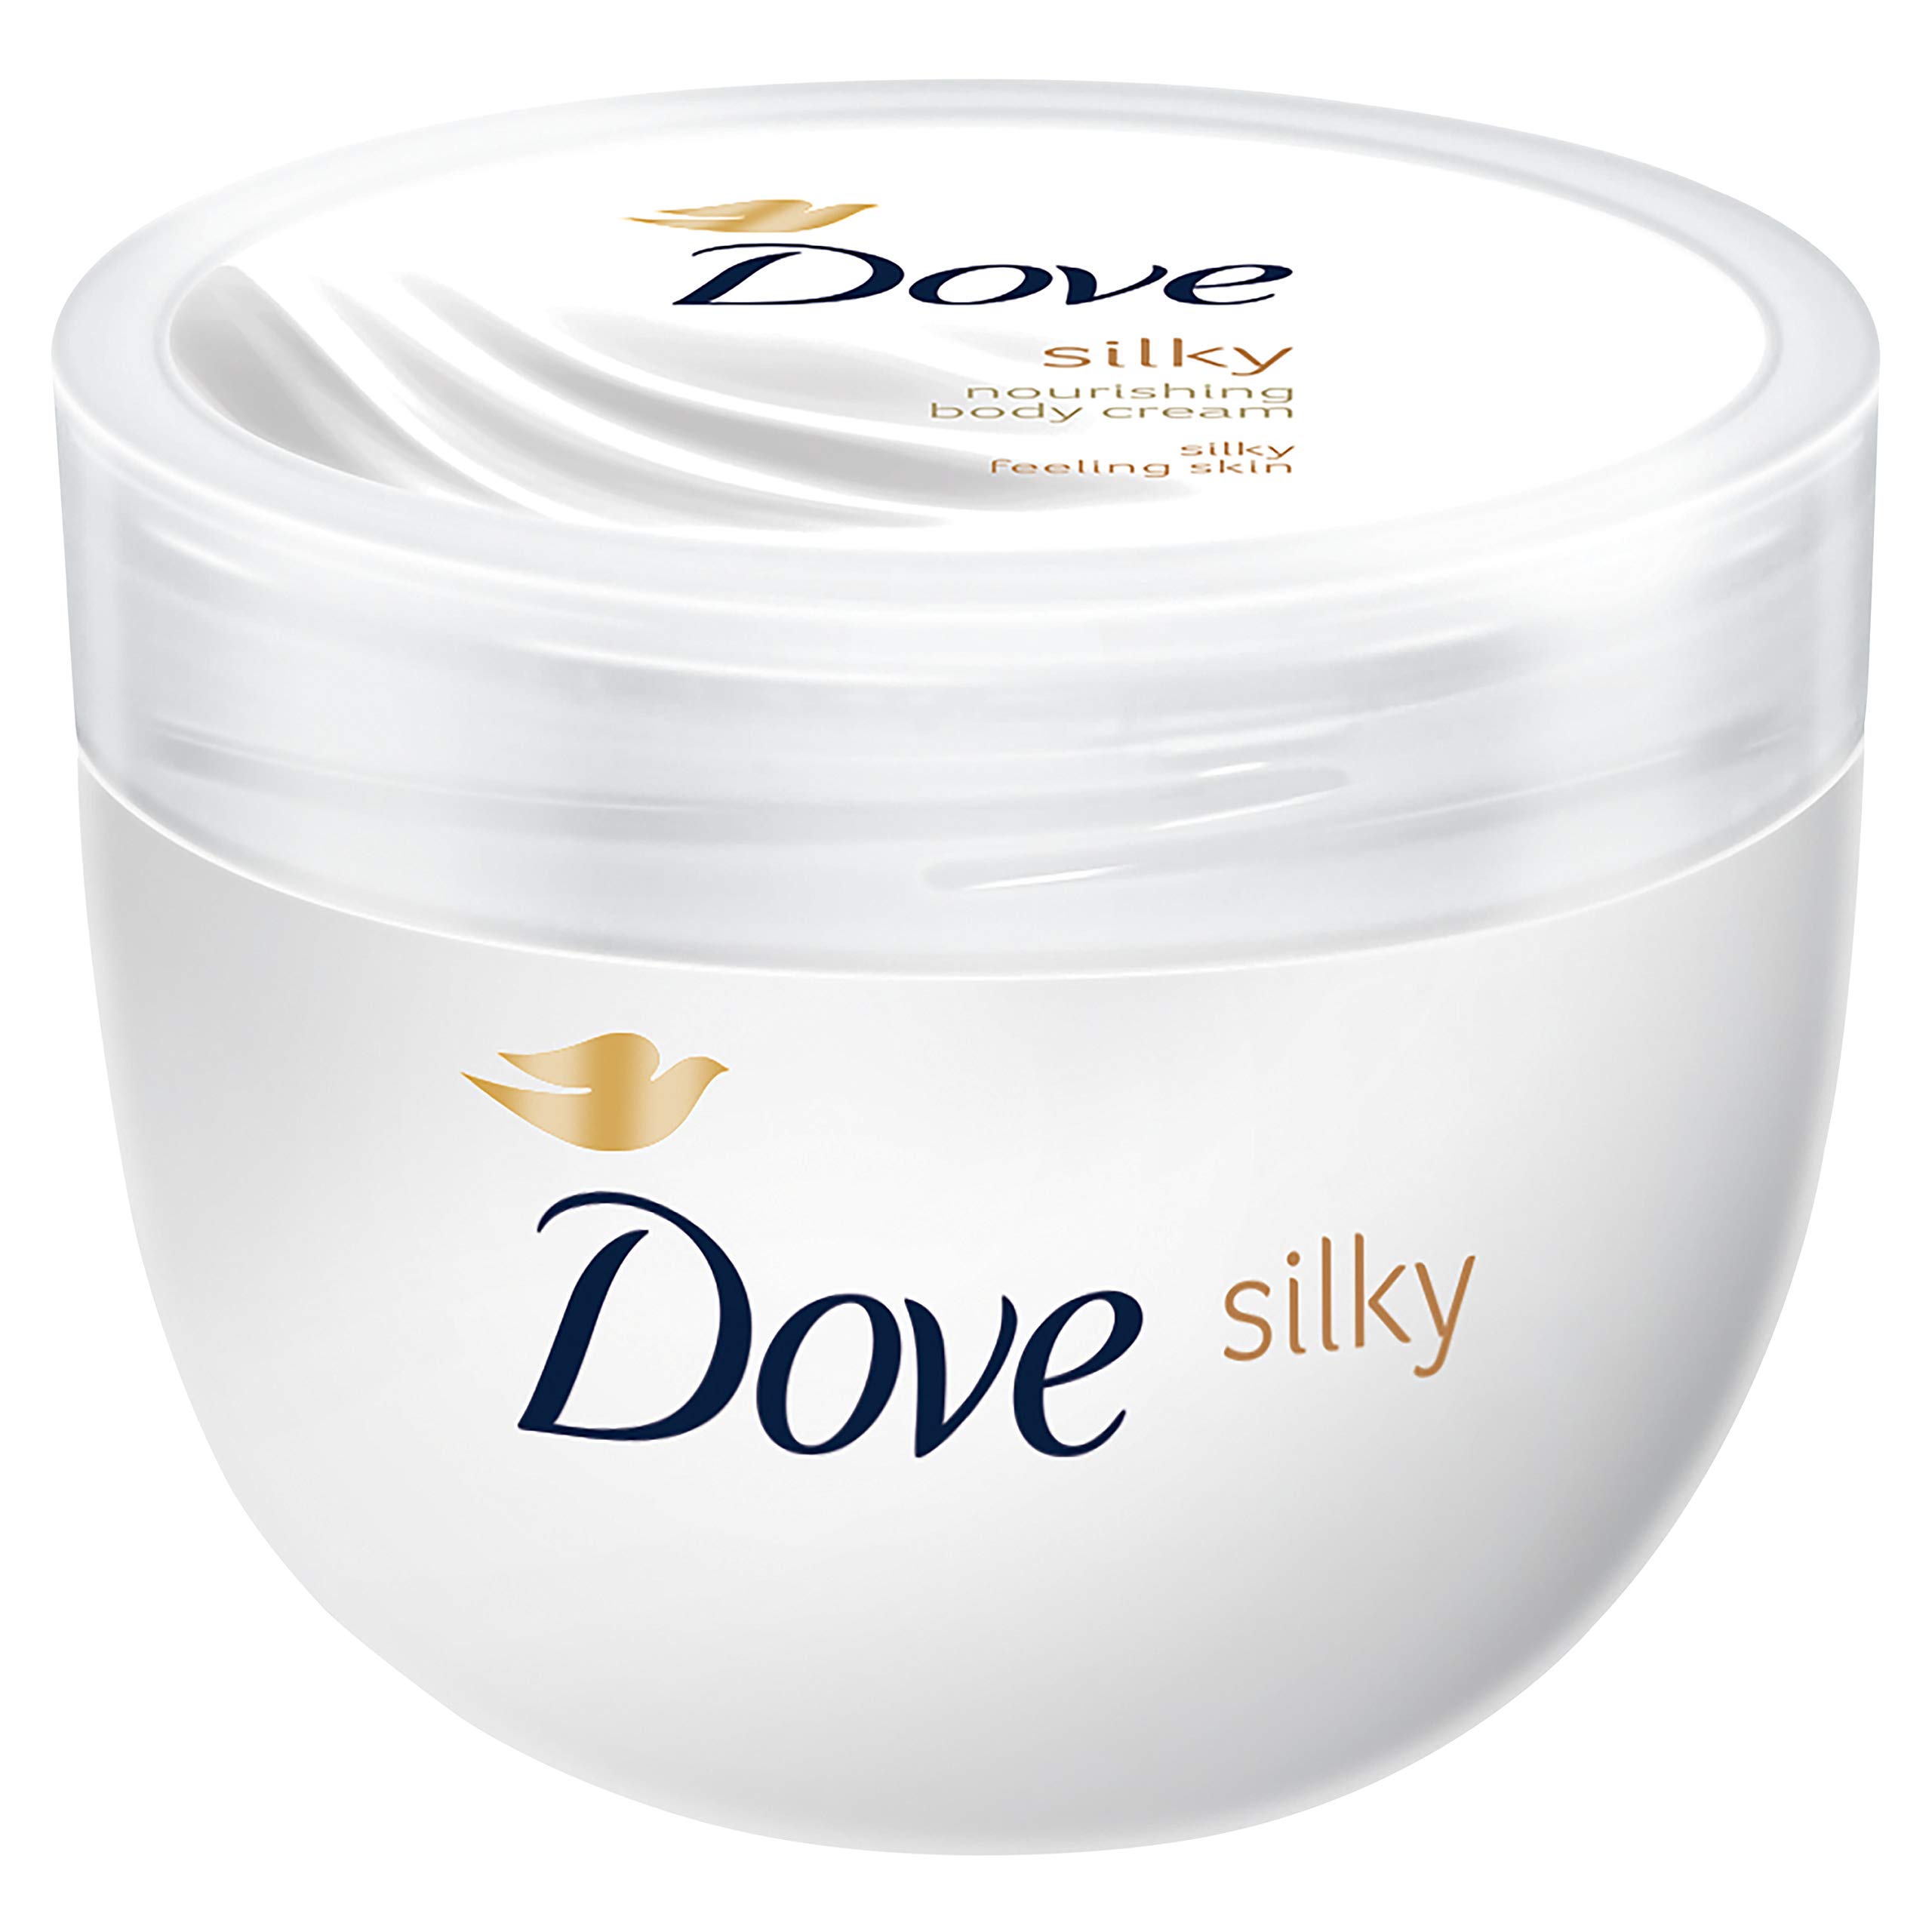 dove nourishing body care silky pampering body cream